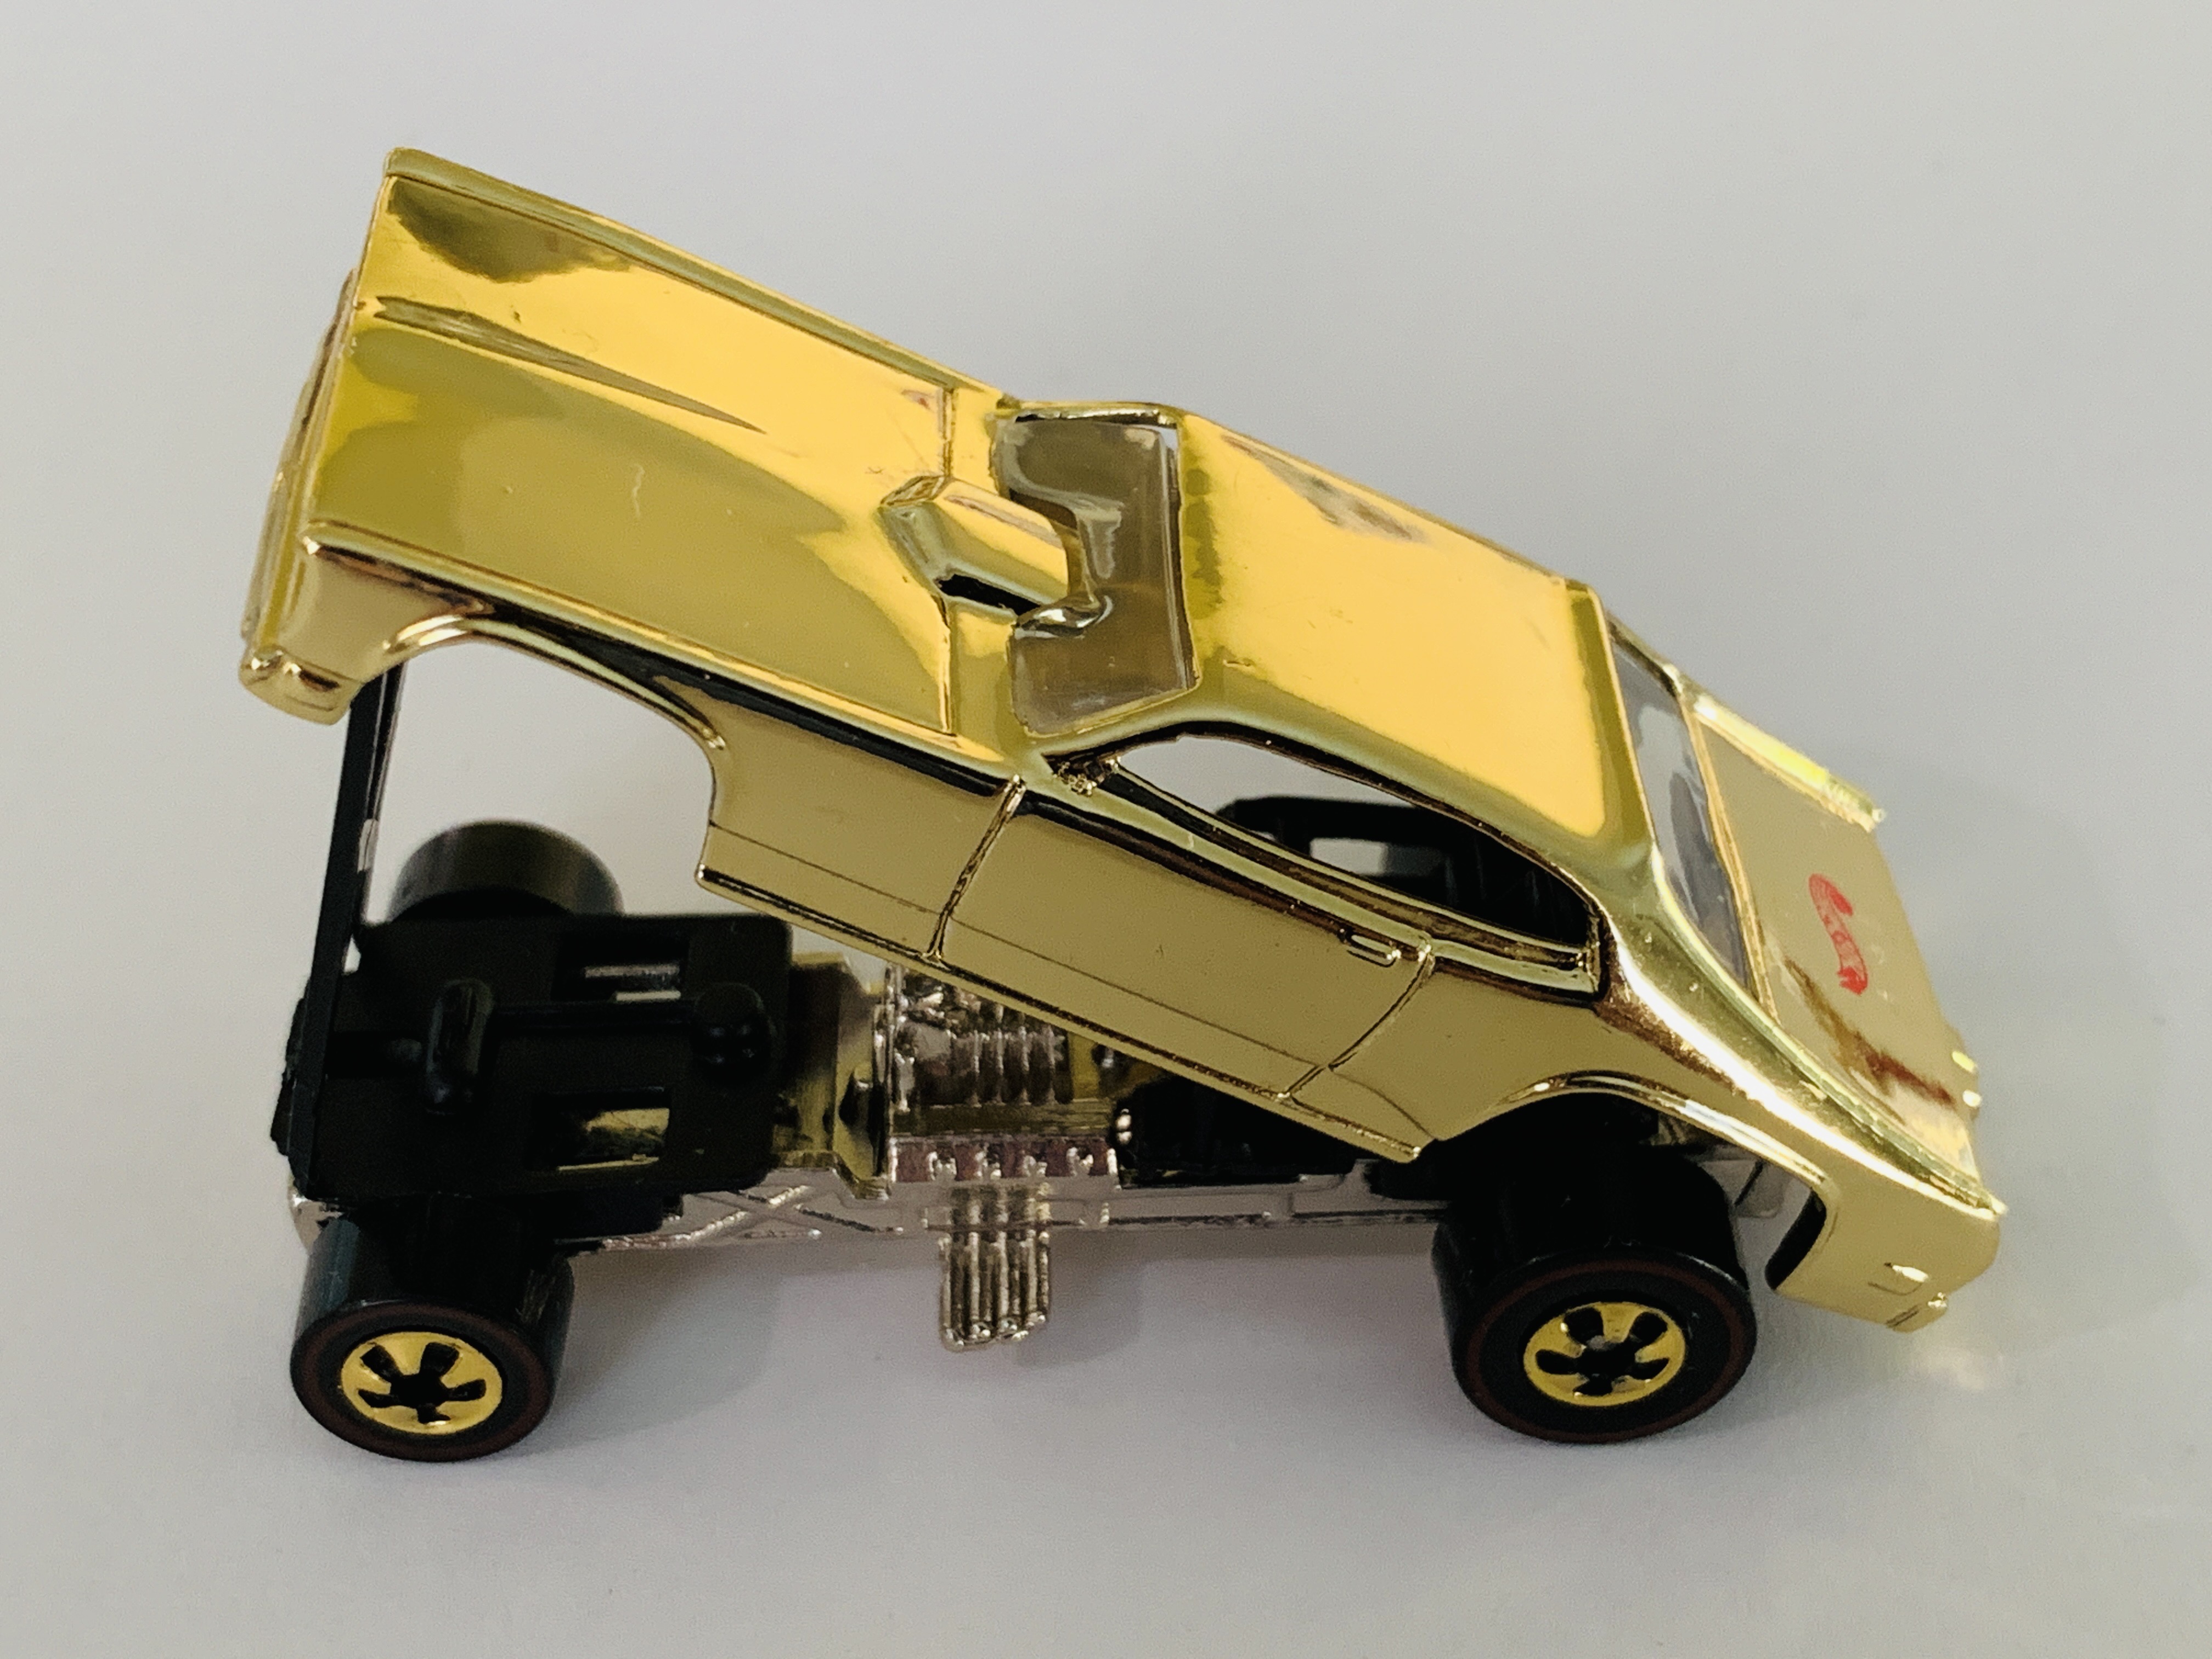 Hot Wheels FAO Schwarz Gold Series II Mongoose Funny Car